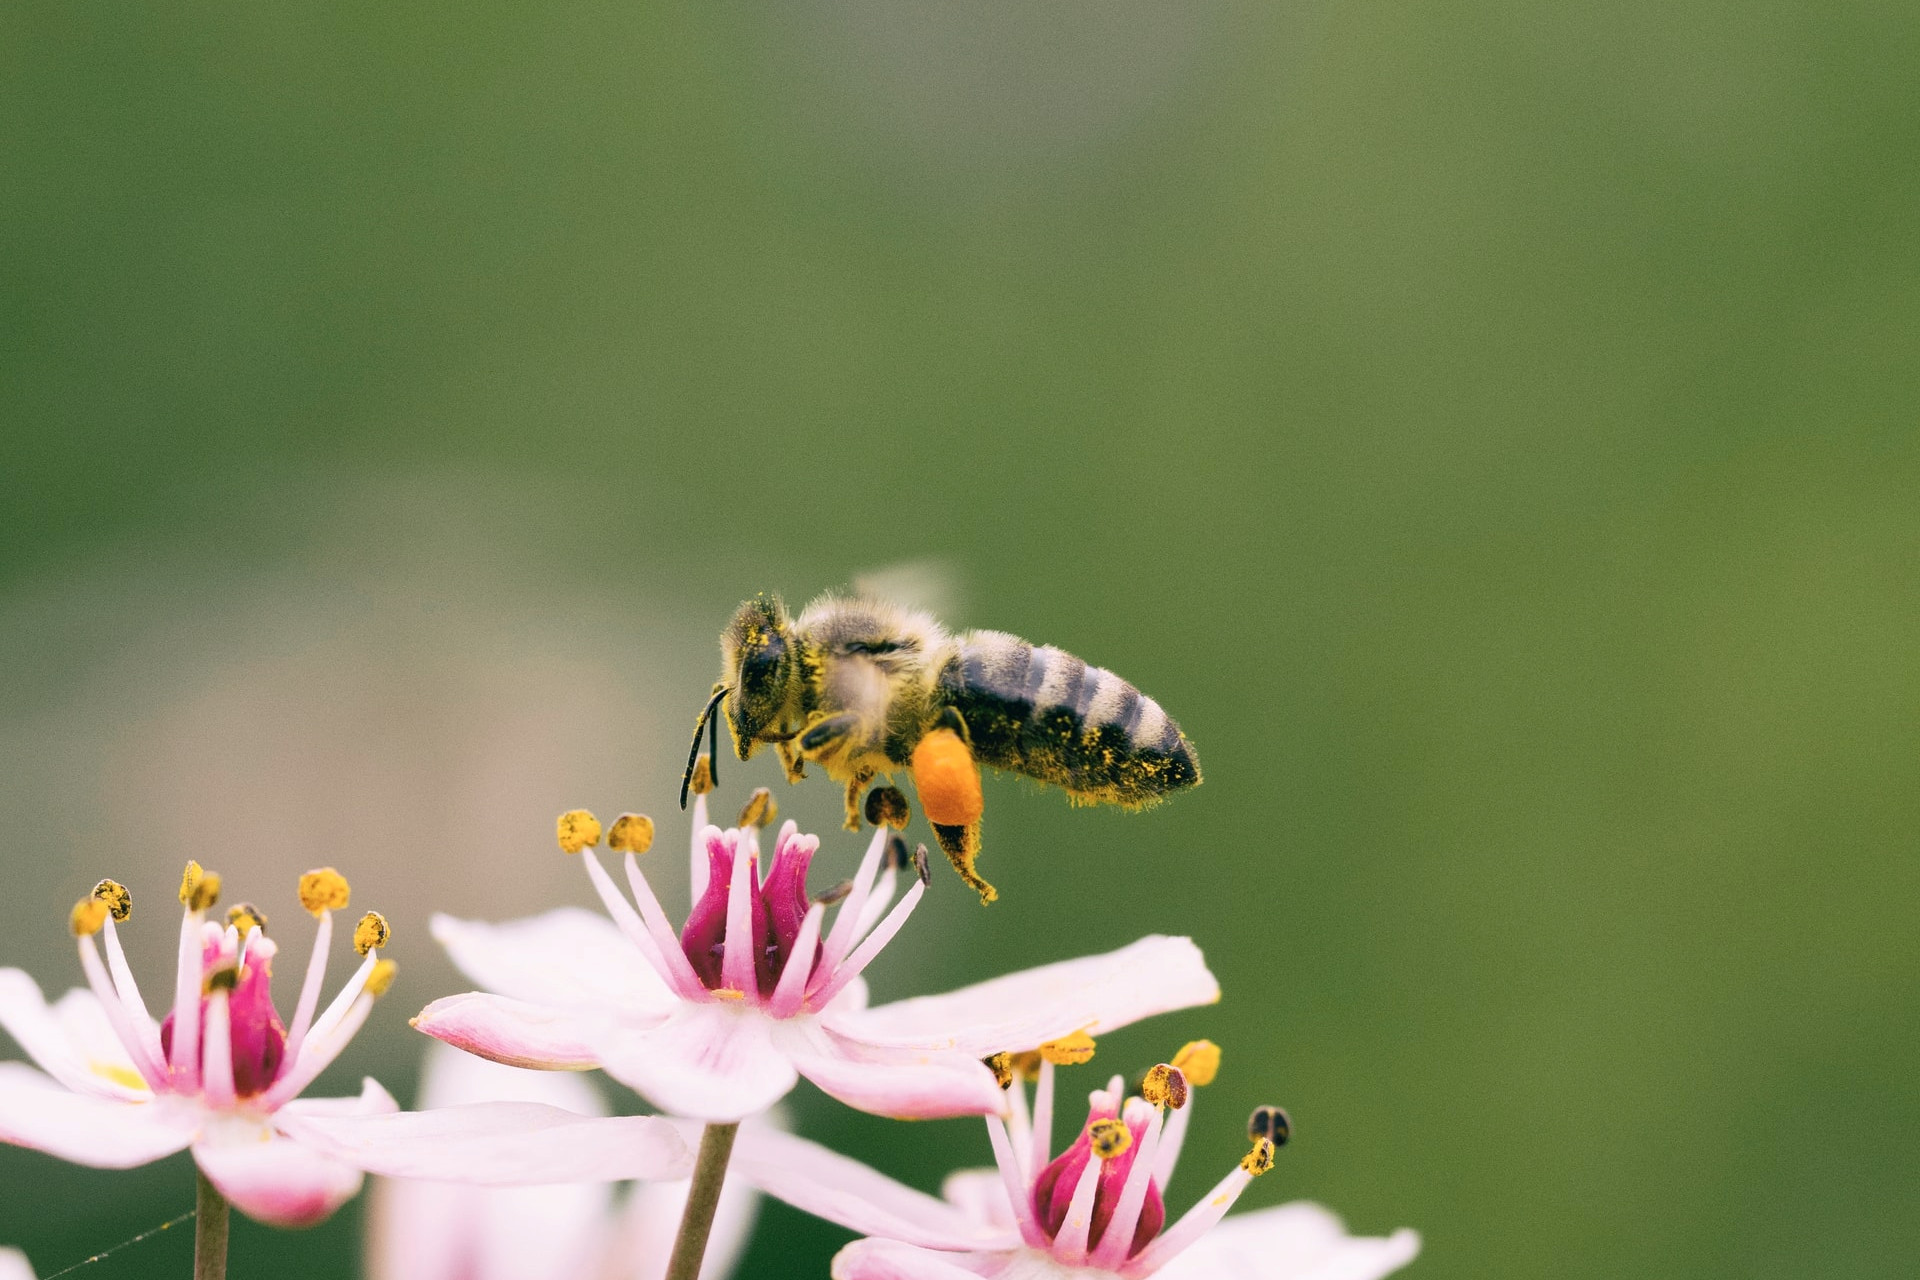 Hornet eating flower by Aaron Burden on Unsplash